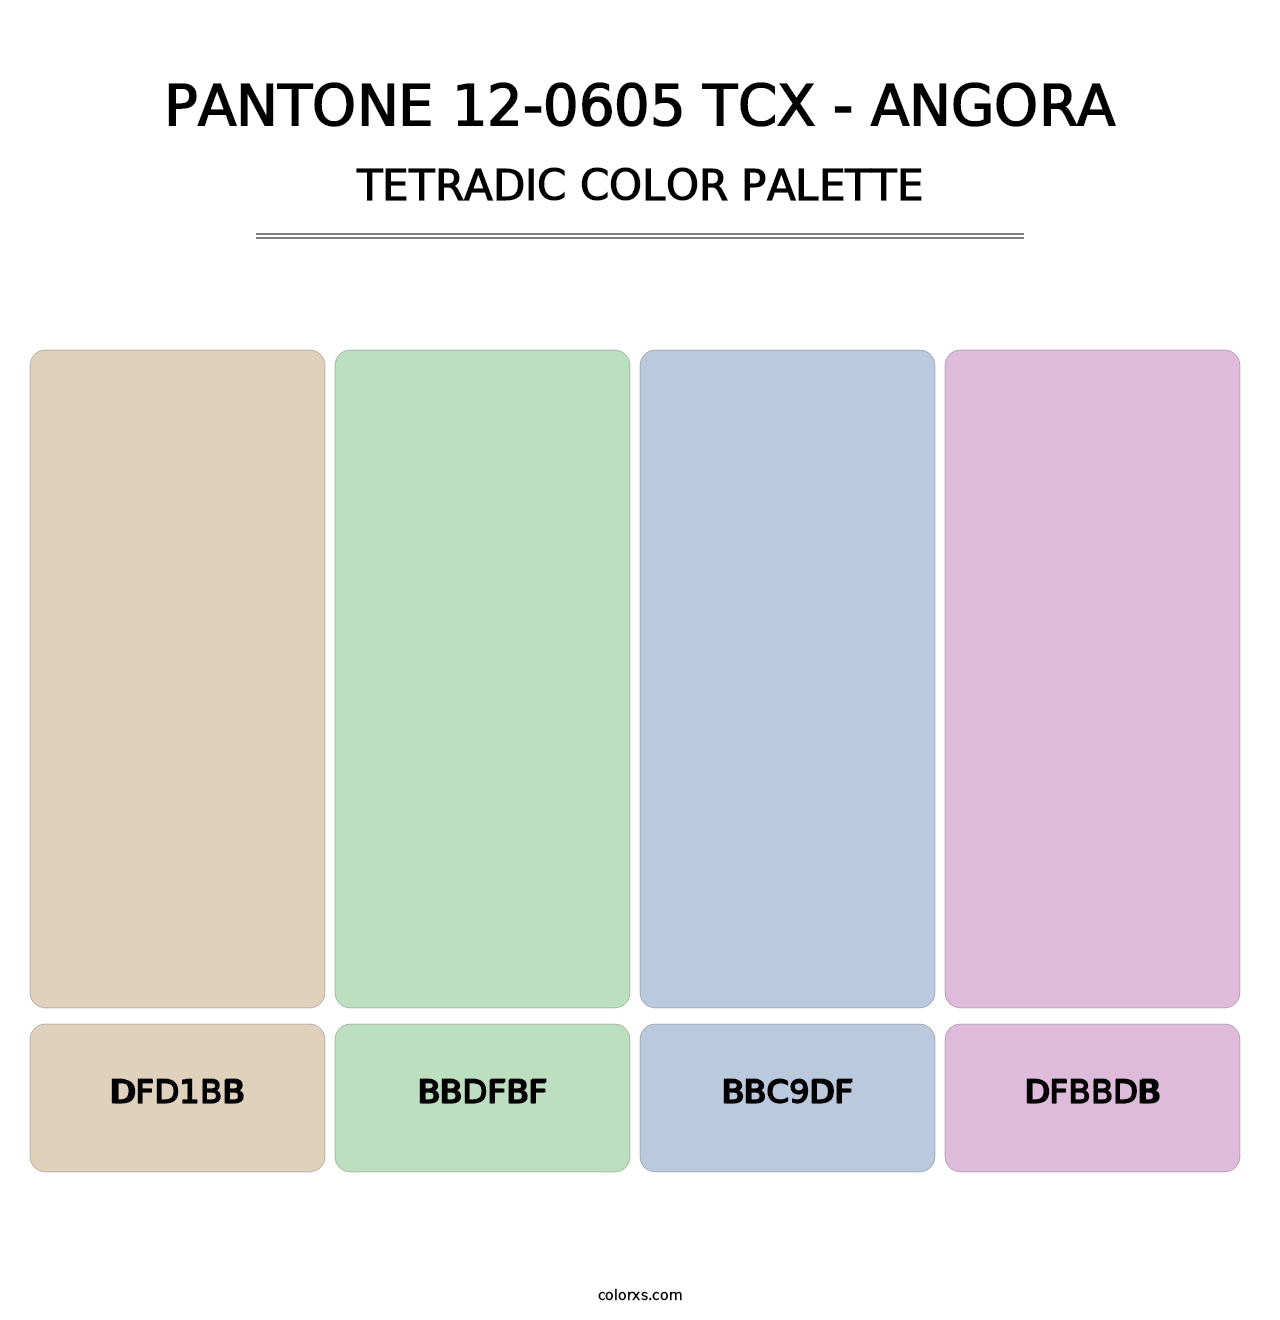 PANTONE 12-0605 TCX - Angora - Tetradic Color Palette